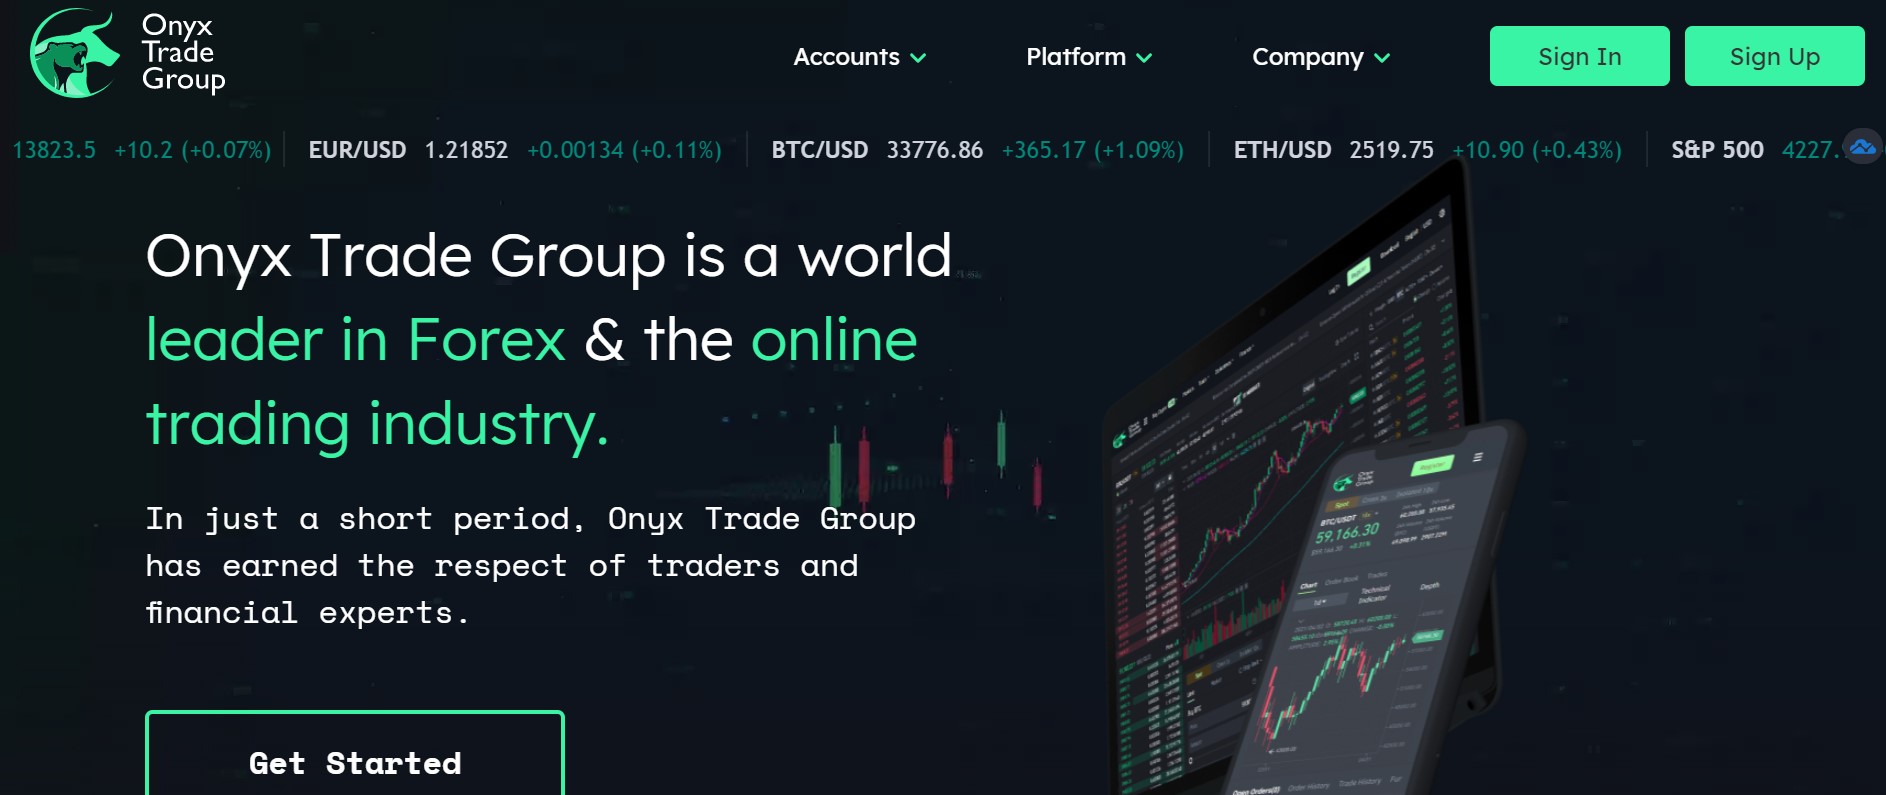 Onyx Trade Group website